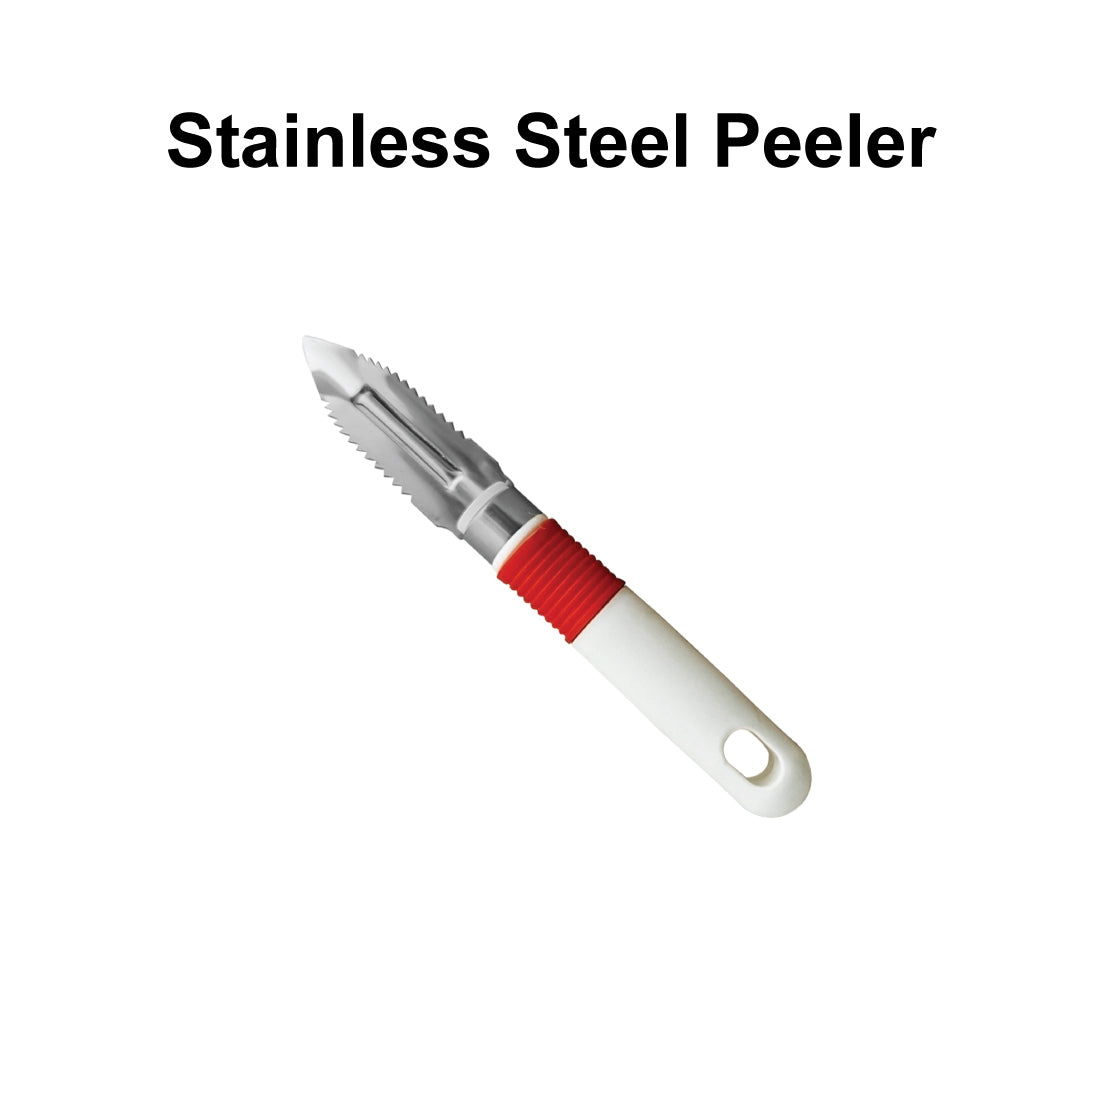 Stainless Steel Peeler